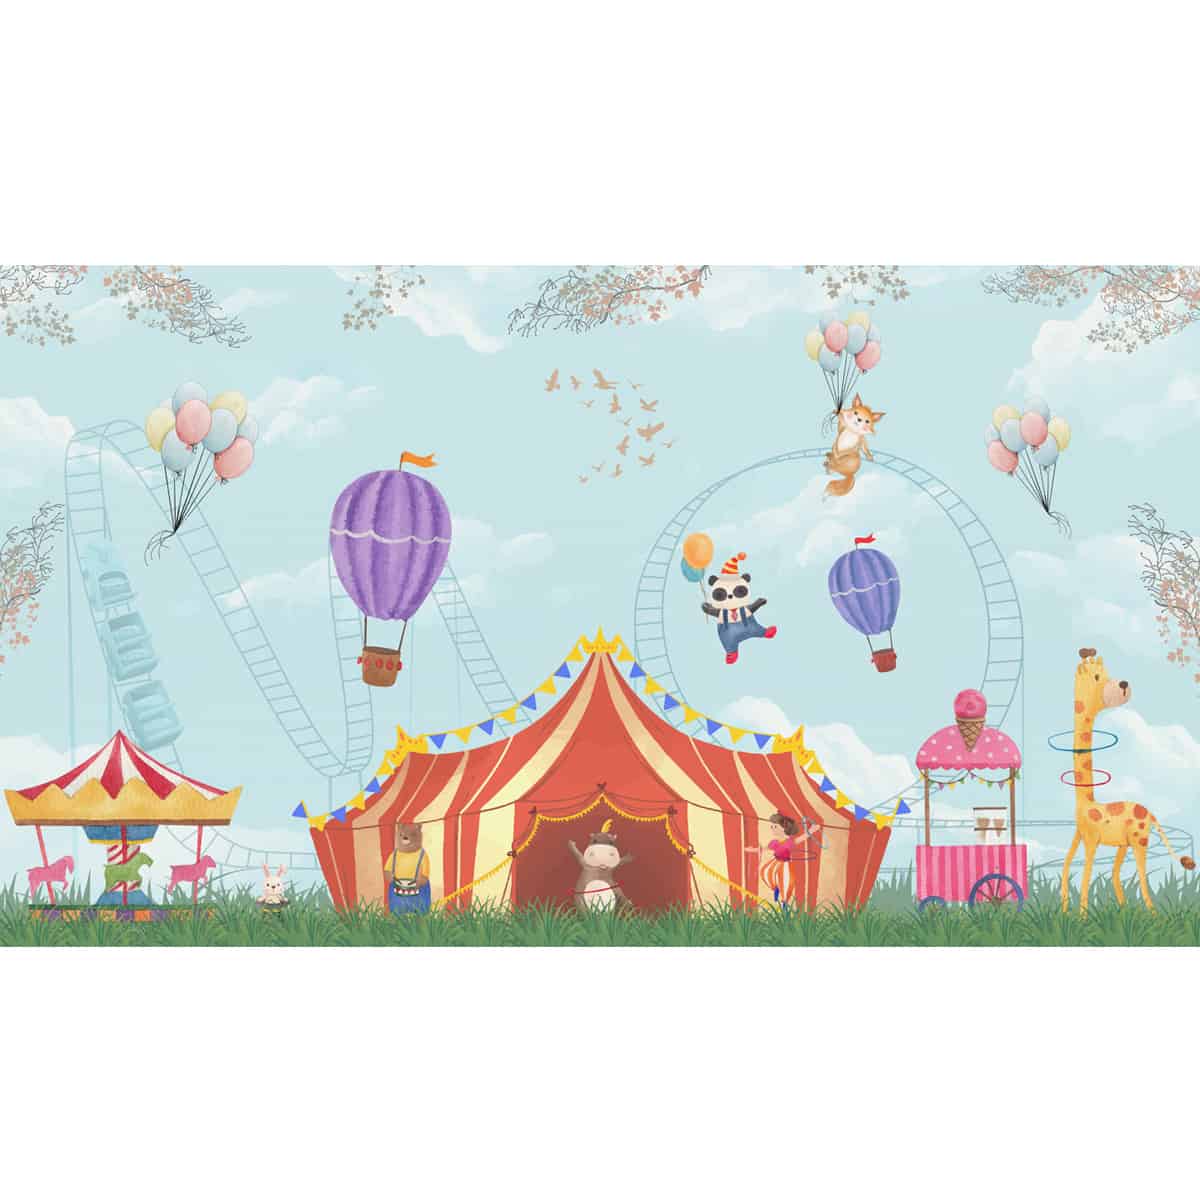 Animal Fiesta: Carnival Theme Wallpaper for Kids room